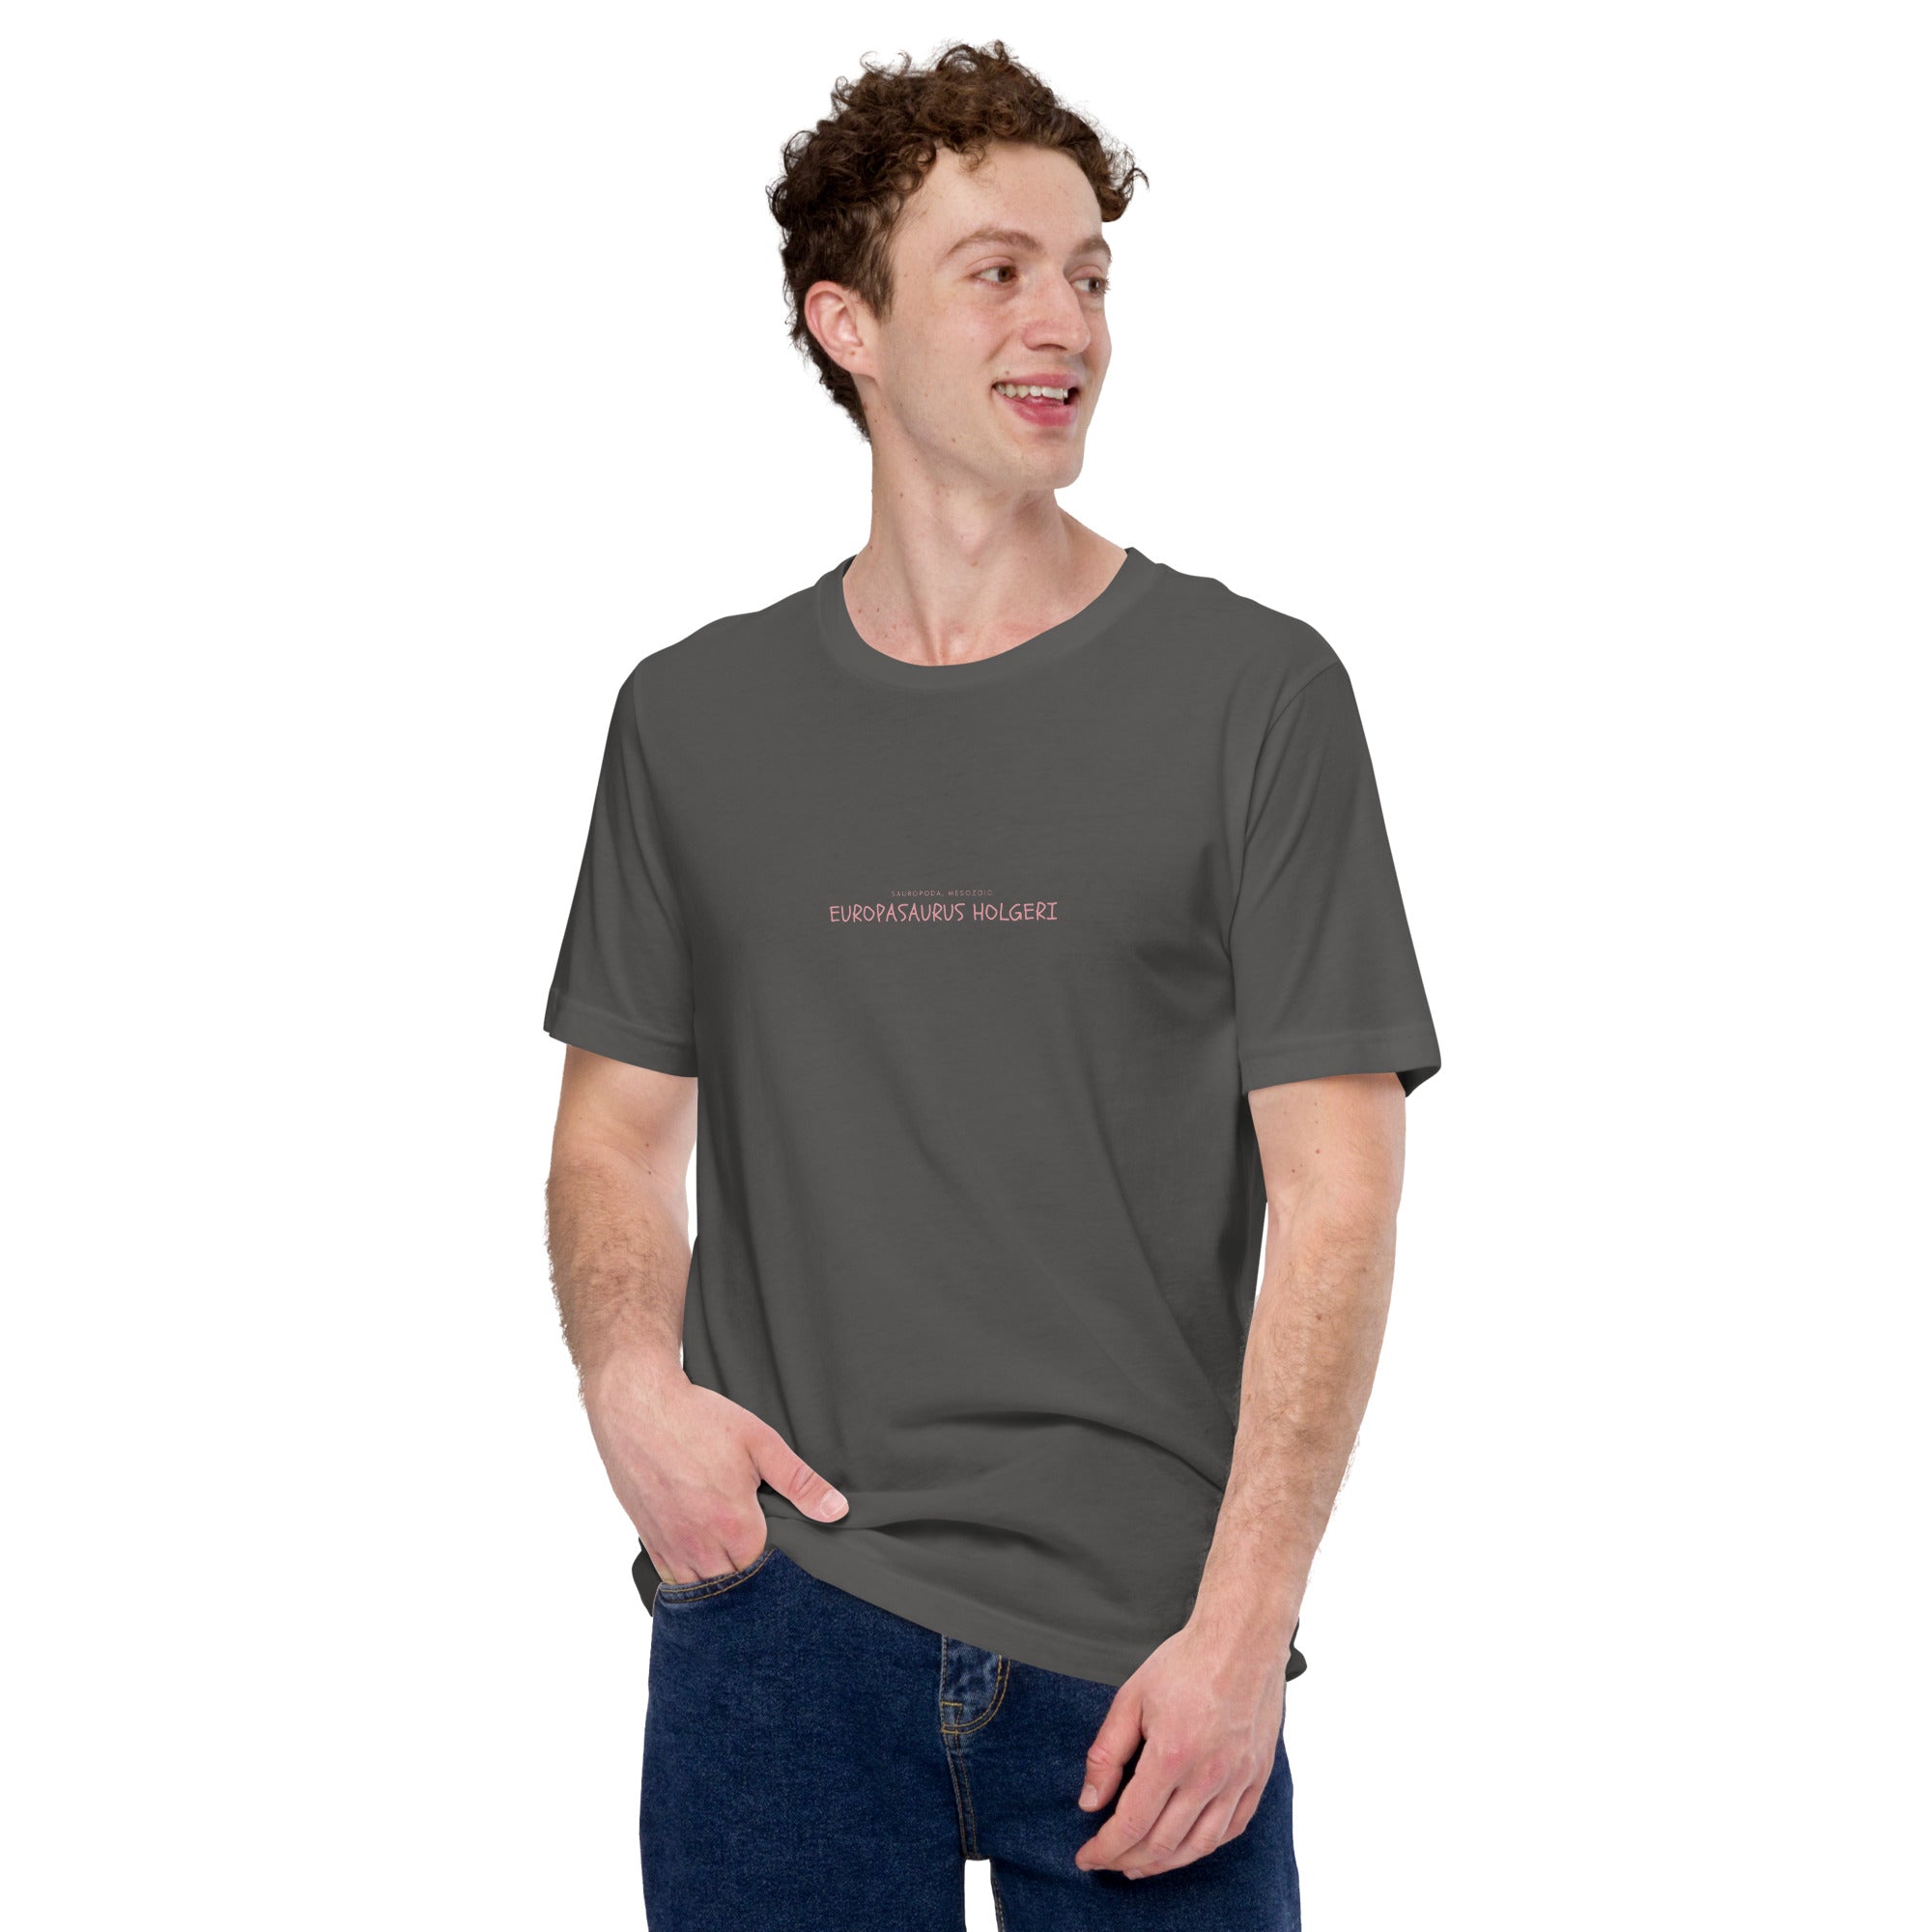 Unisex t-shirt with "Europasaurus holgeri" text